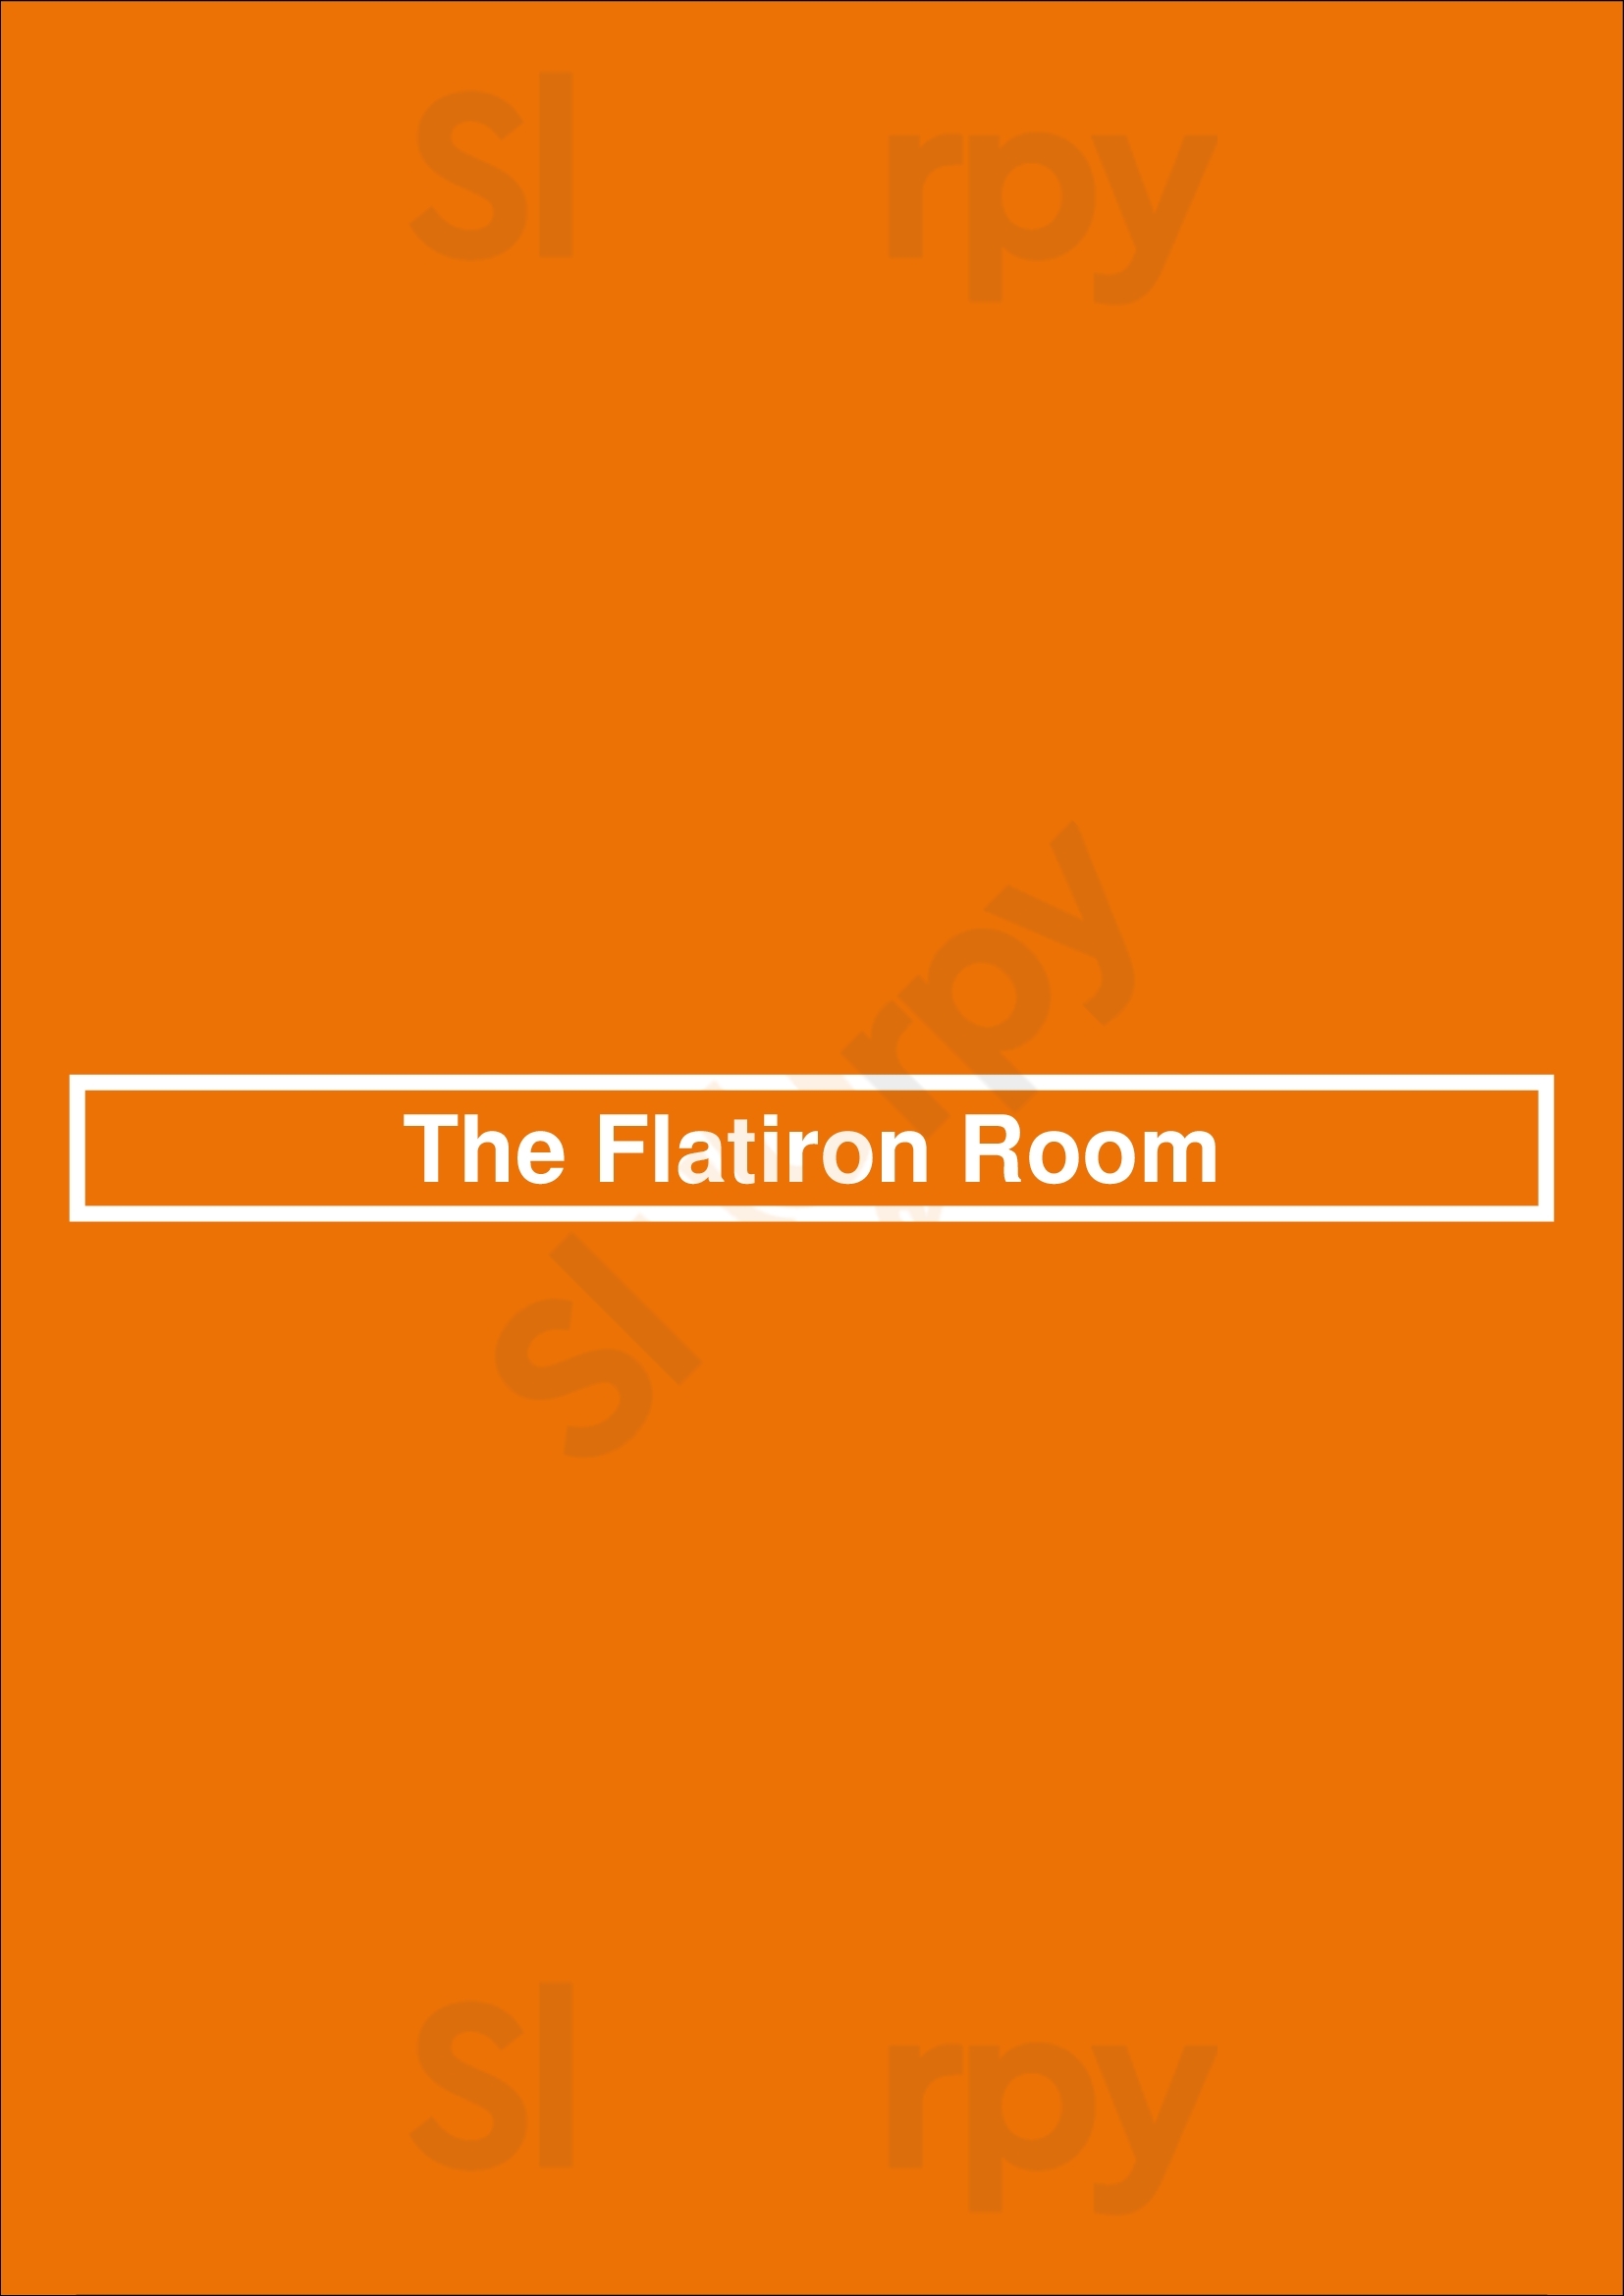 The Flatiron Room Nomad New York City Menu - 1